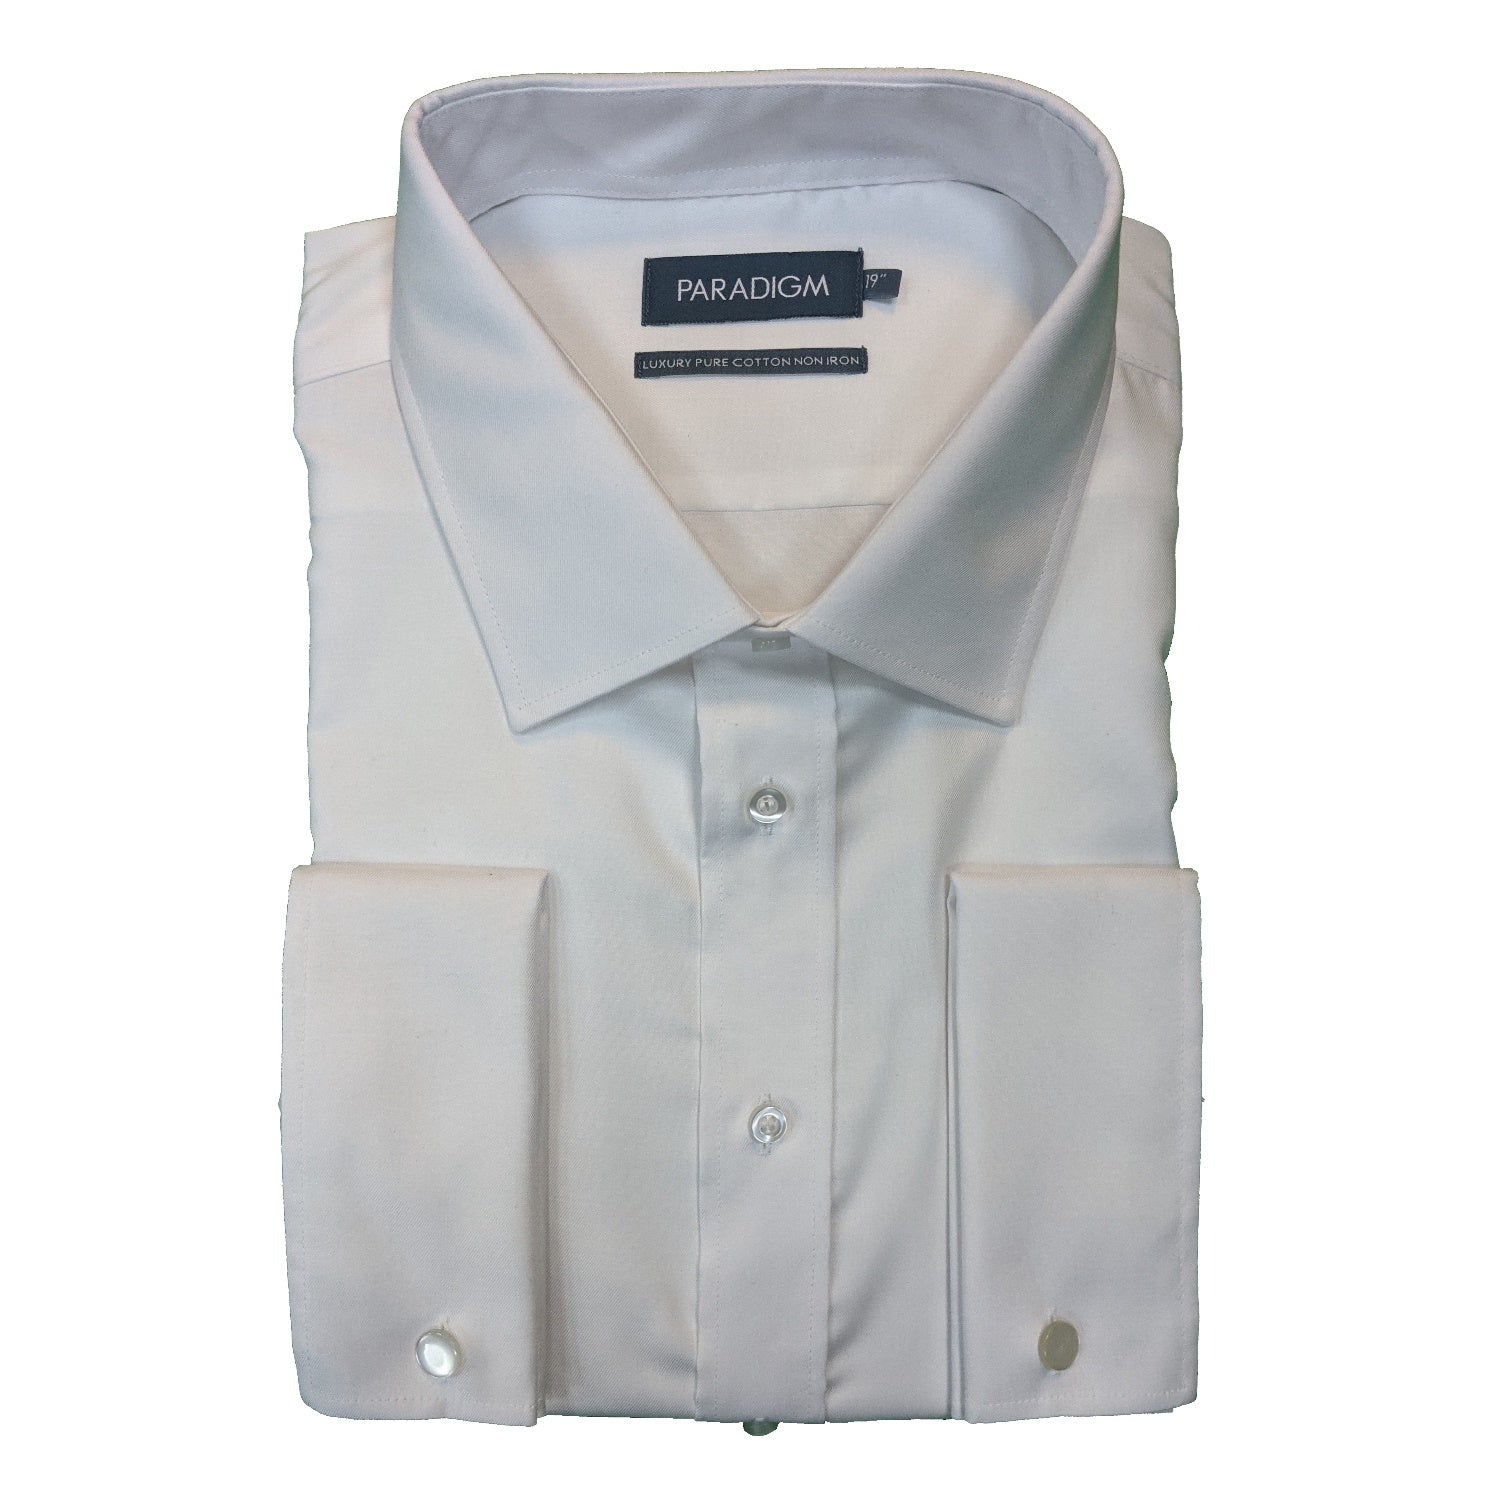 Paradigm Double Cuff Shirt - SLX8501 - White 1